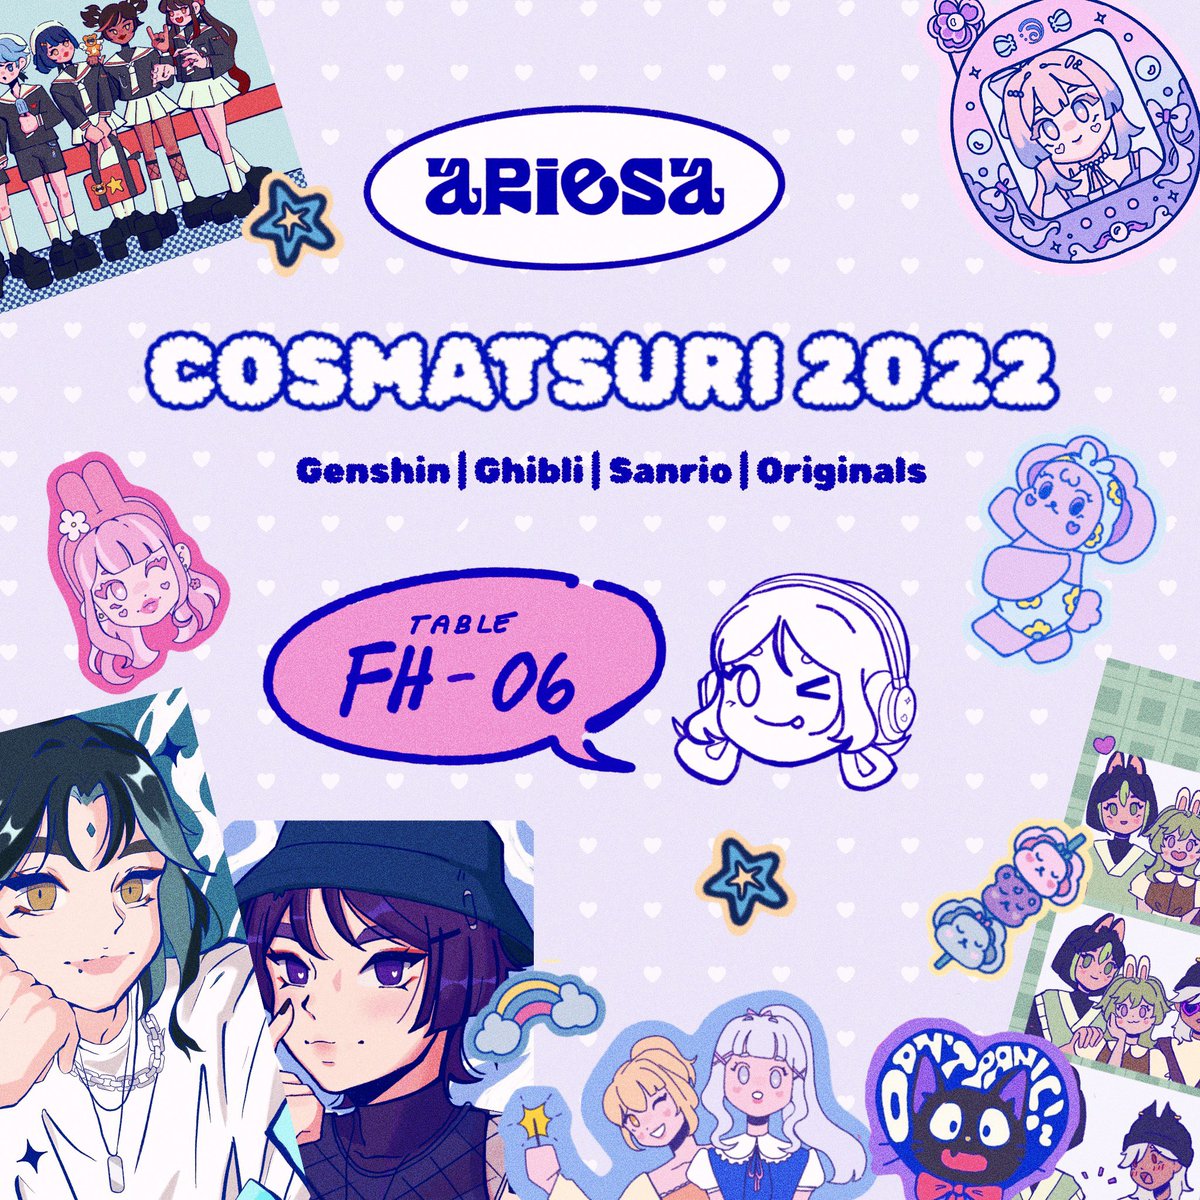 my merch catalogue for cosmatsu this dec 28-30!! 🤩 come see me at FH-06! 💖

#CosplayMatsuri2022
#CosmatsuriFanFair2022 